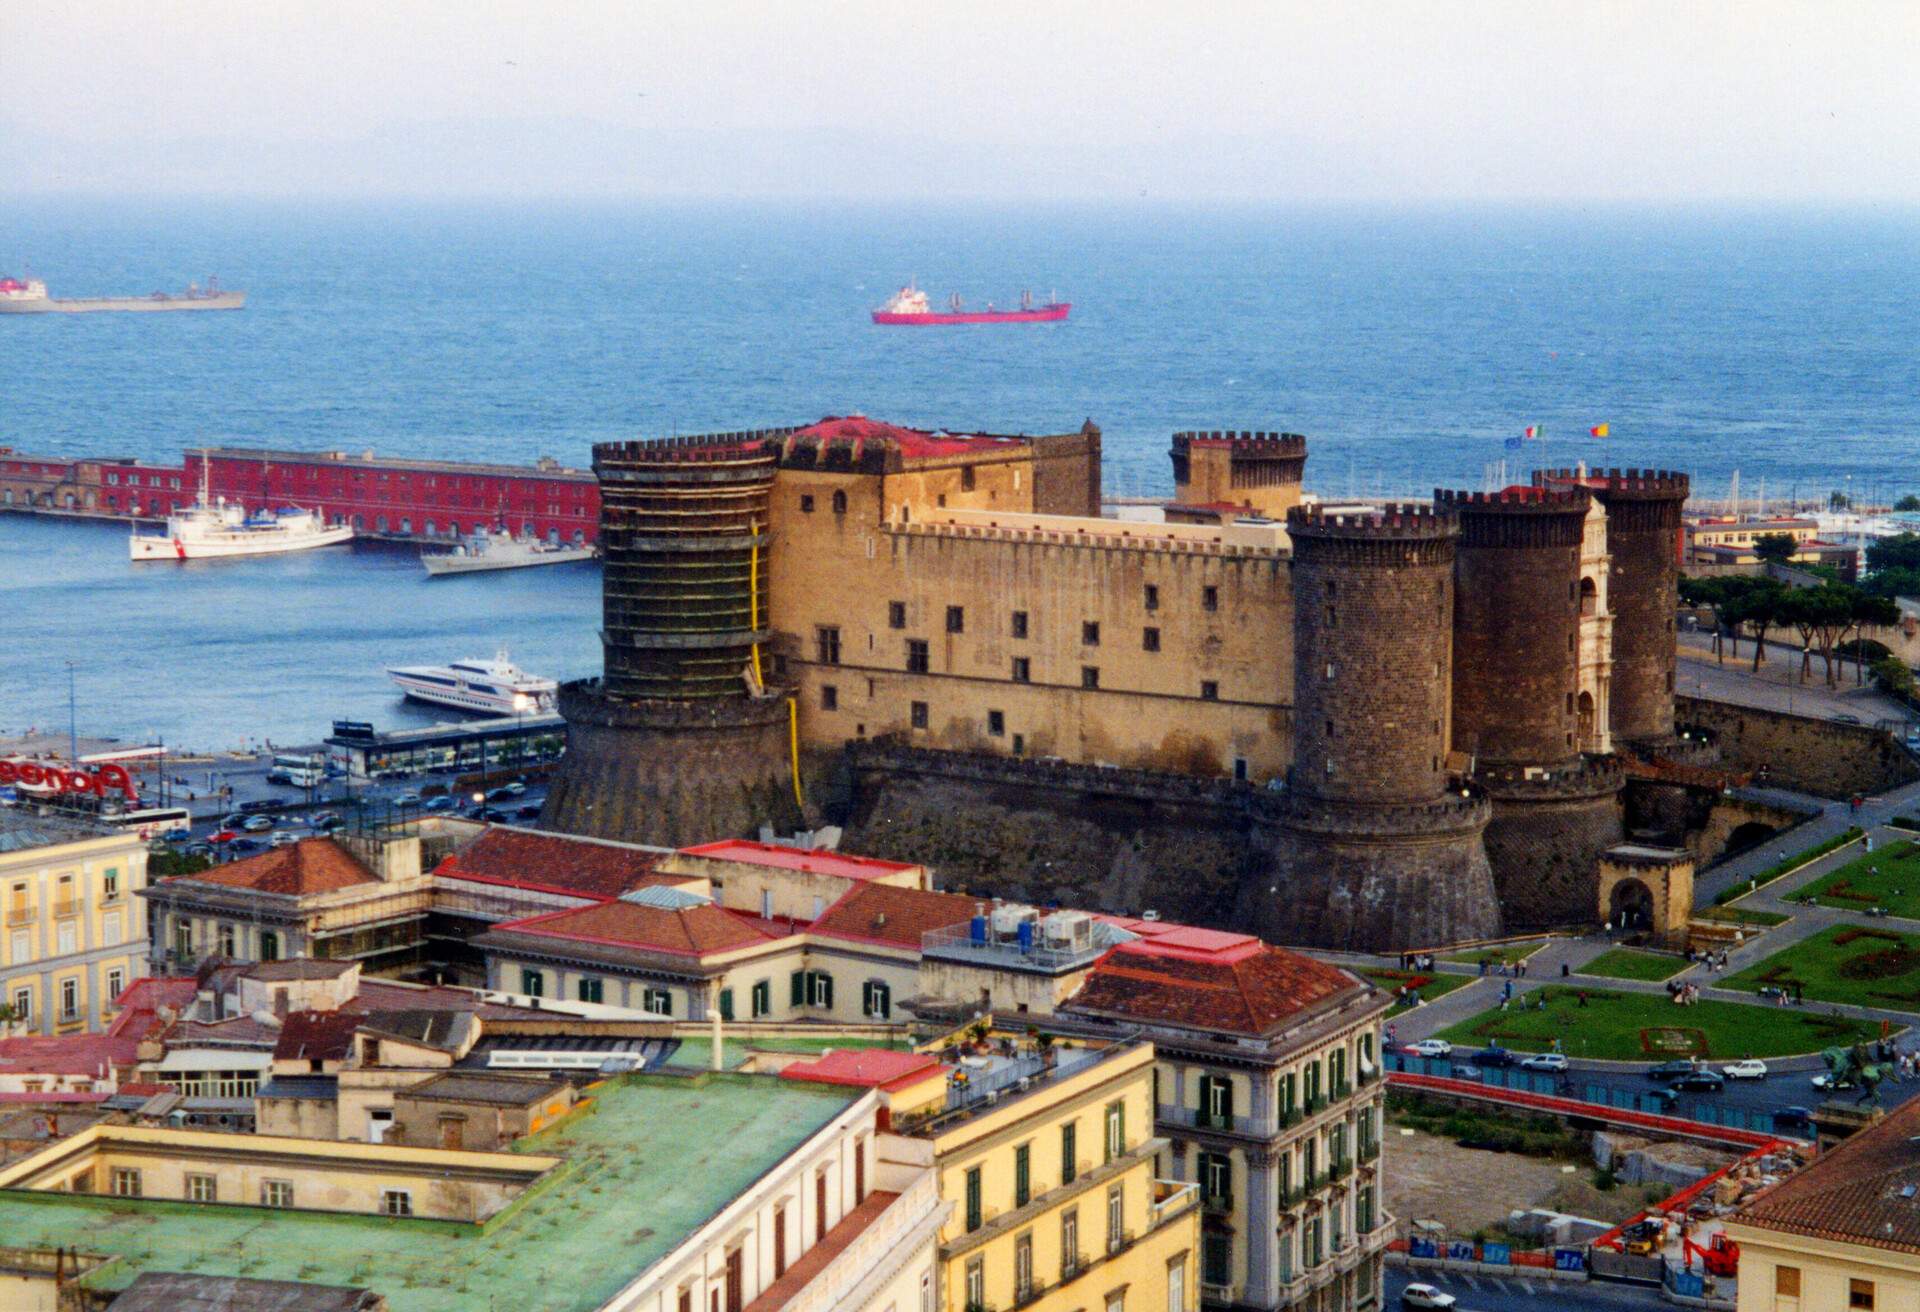 Castel Nuovo, also called Maschio Angioino, castle in city center of Naples, ITALY.